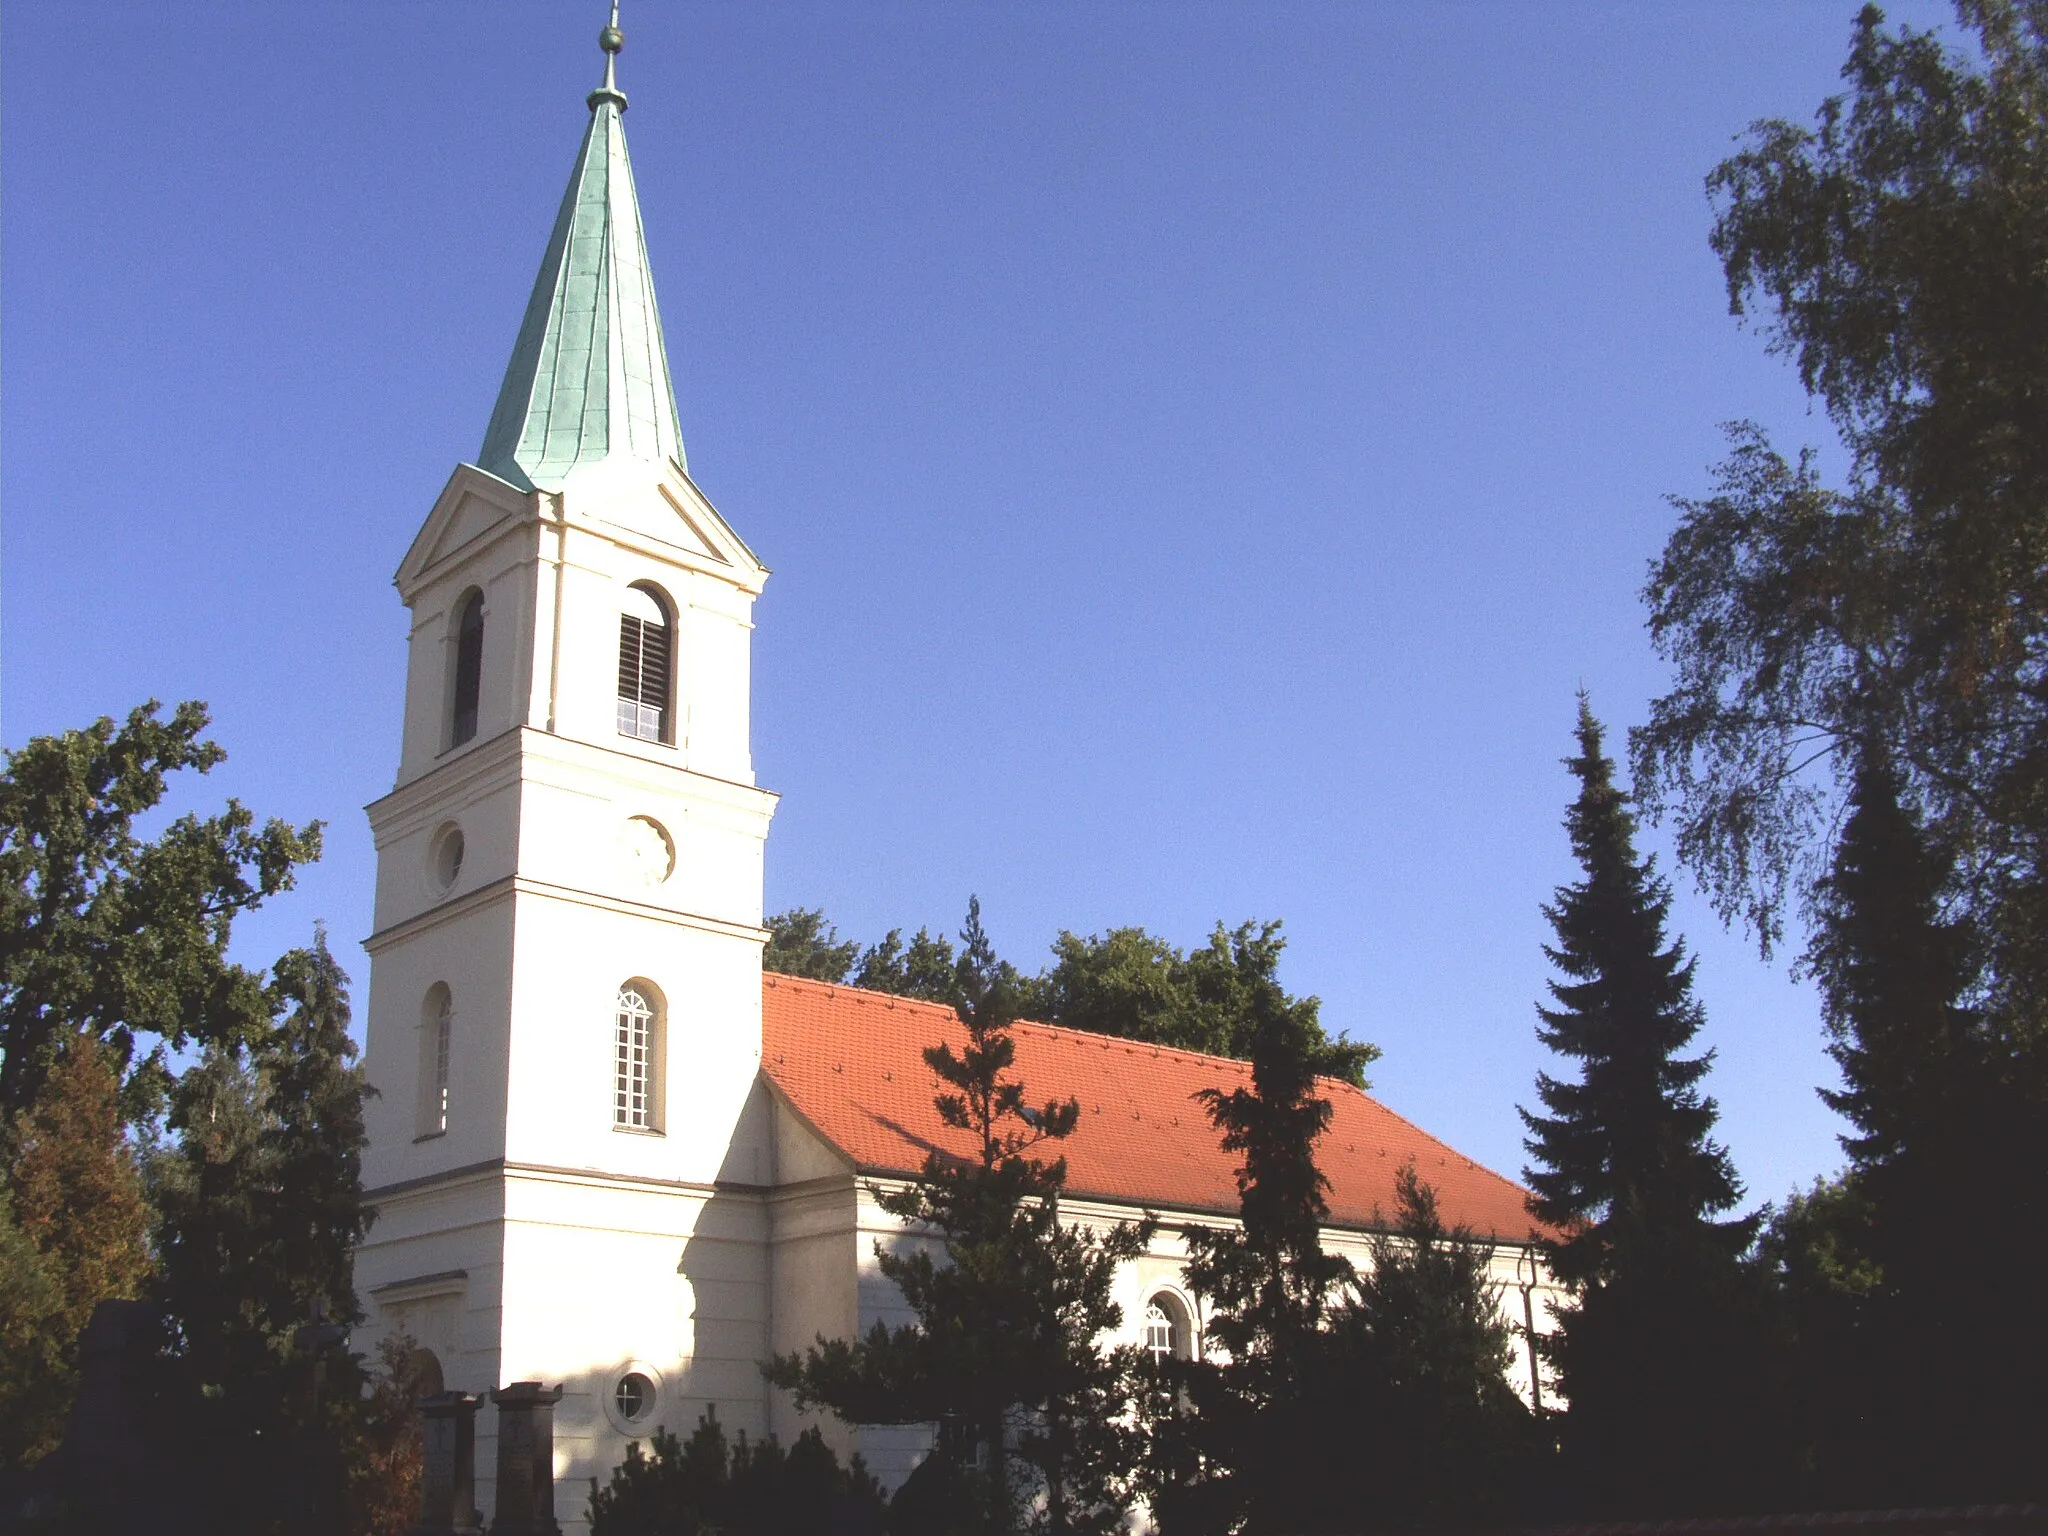 Photo showing: The village church in Ahrensfelde, Brandenburg, Germany.